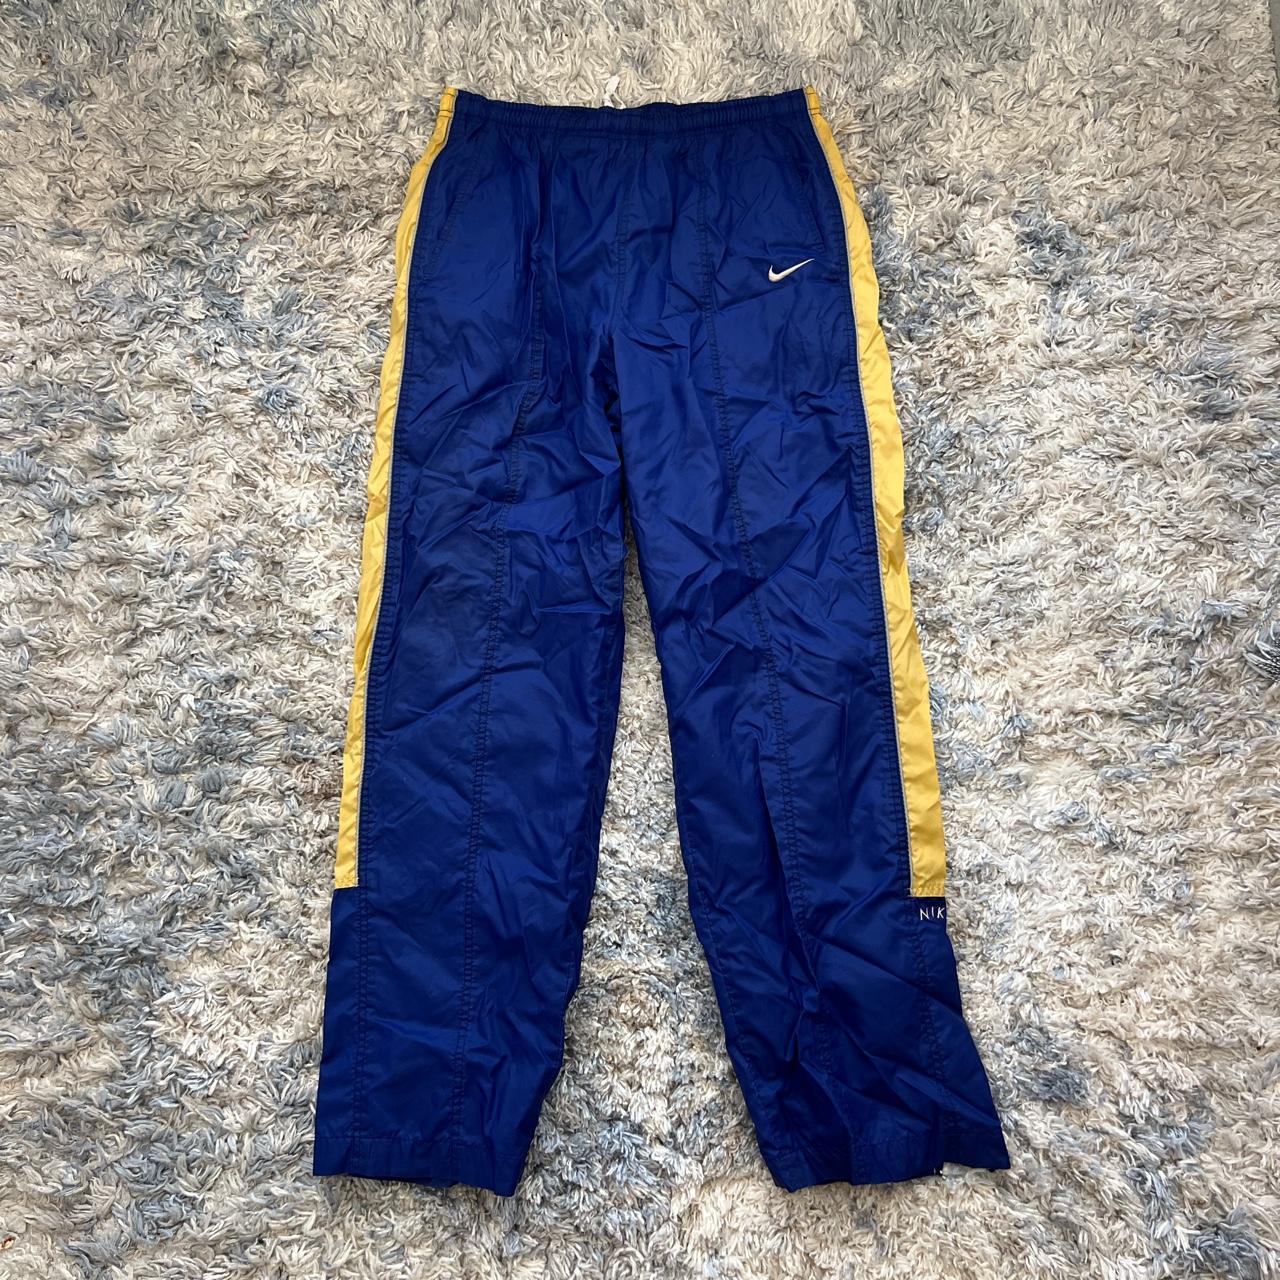 Vintage 90s/00s Nike Sweatpants, Size L, 30” x